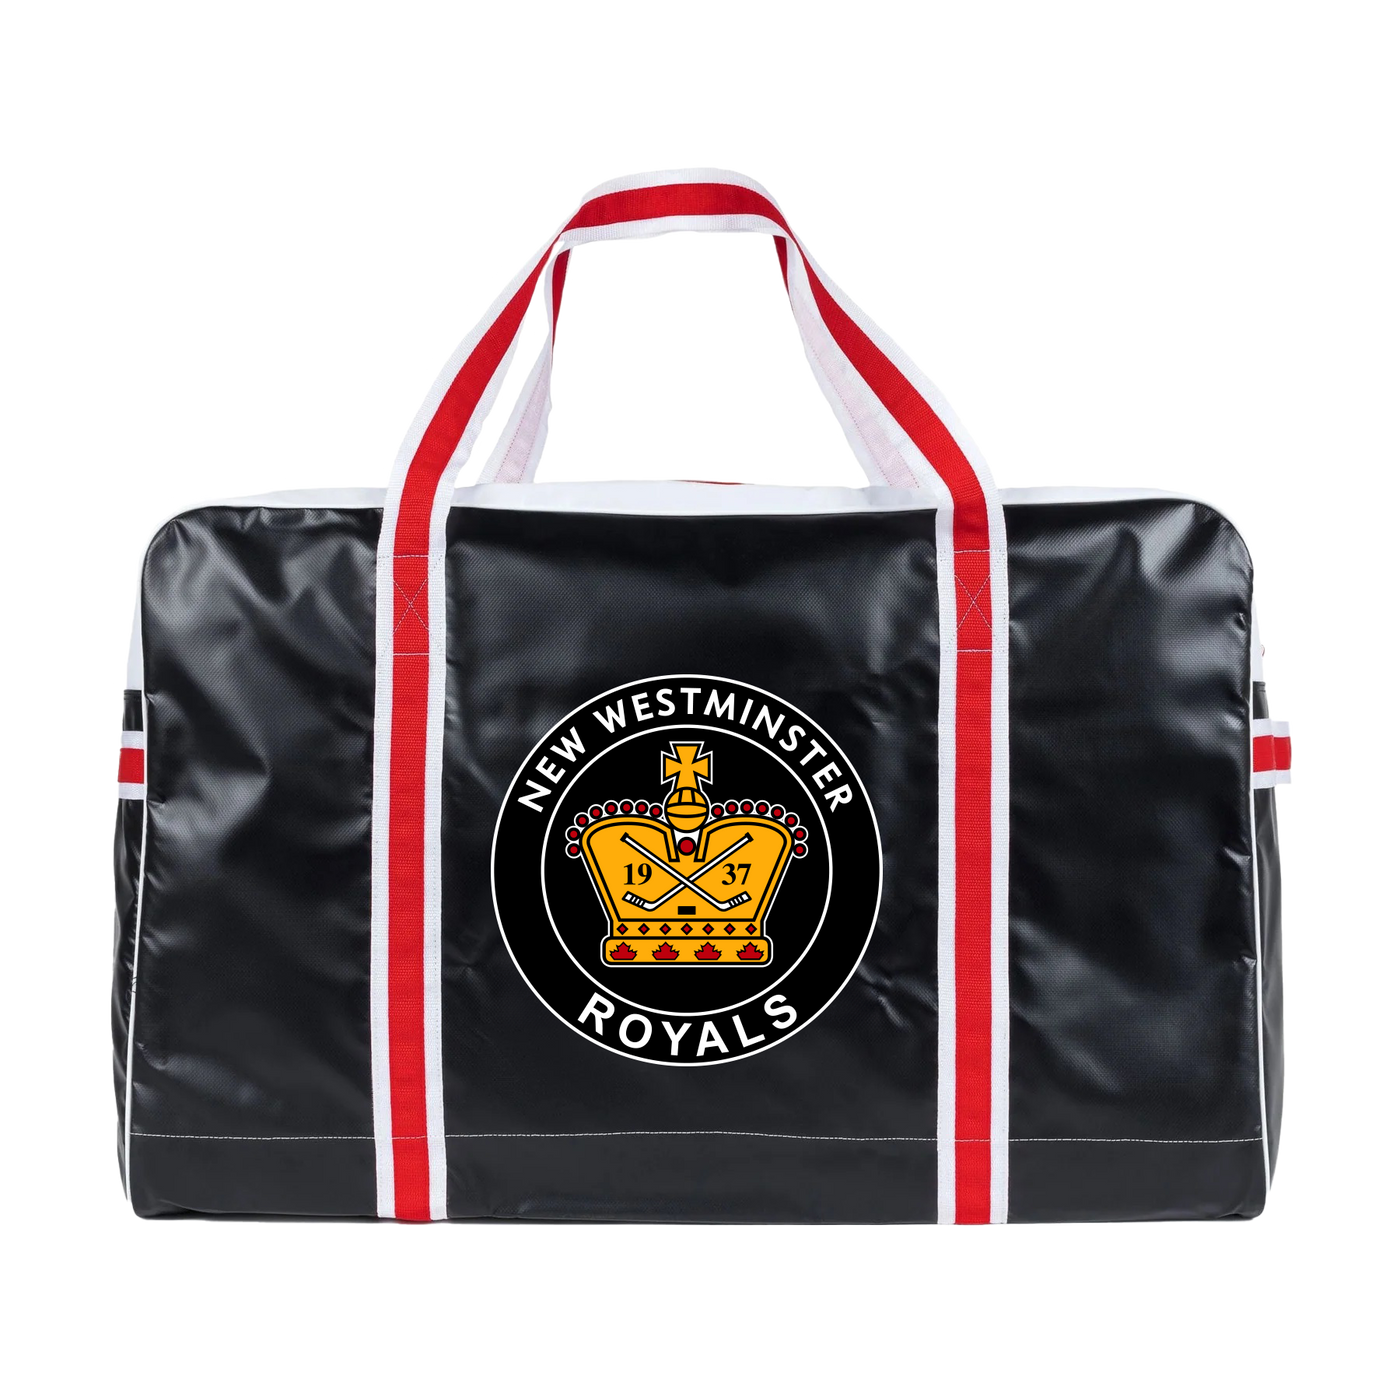 New West Royals -- Warrior Senior Hockey Bag